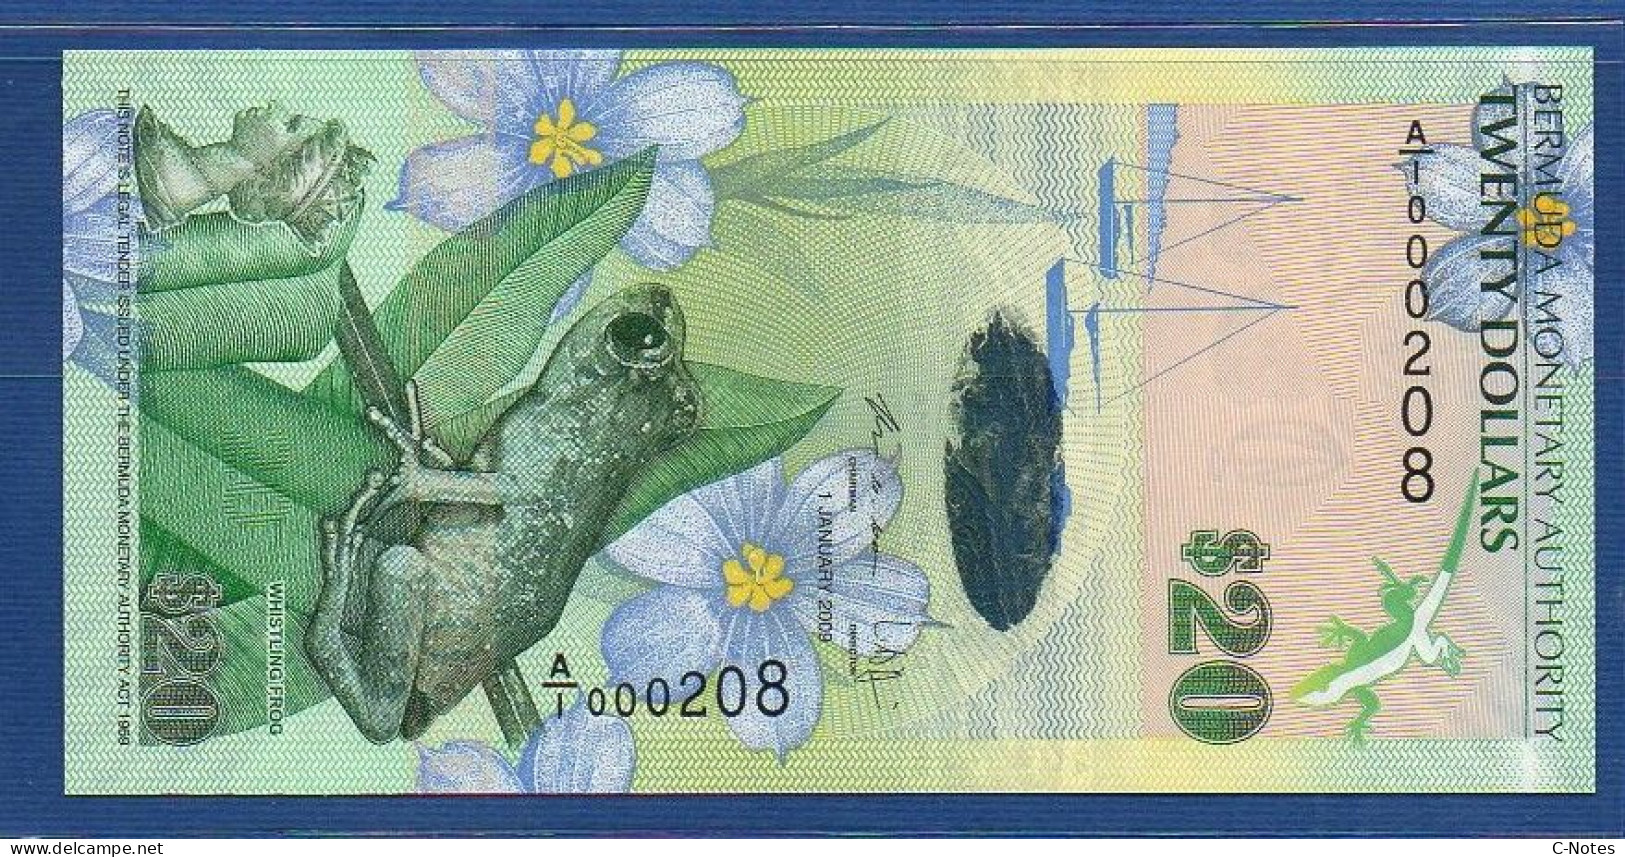 BERMUDA - P.60b1 – 20 Dollars 2009 UNC, S/n A/1 000208 LOW NUMBER - Bermuda